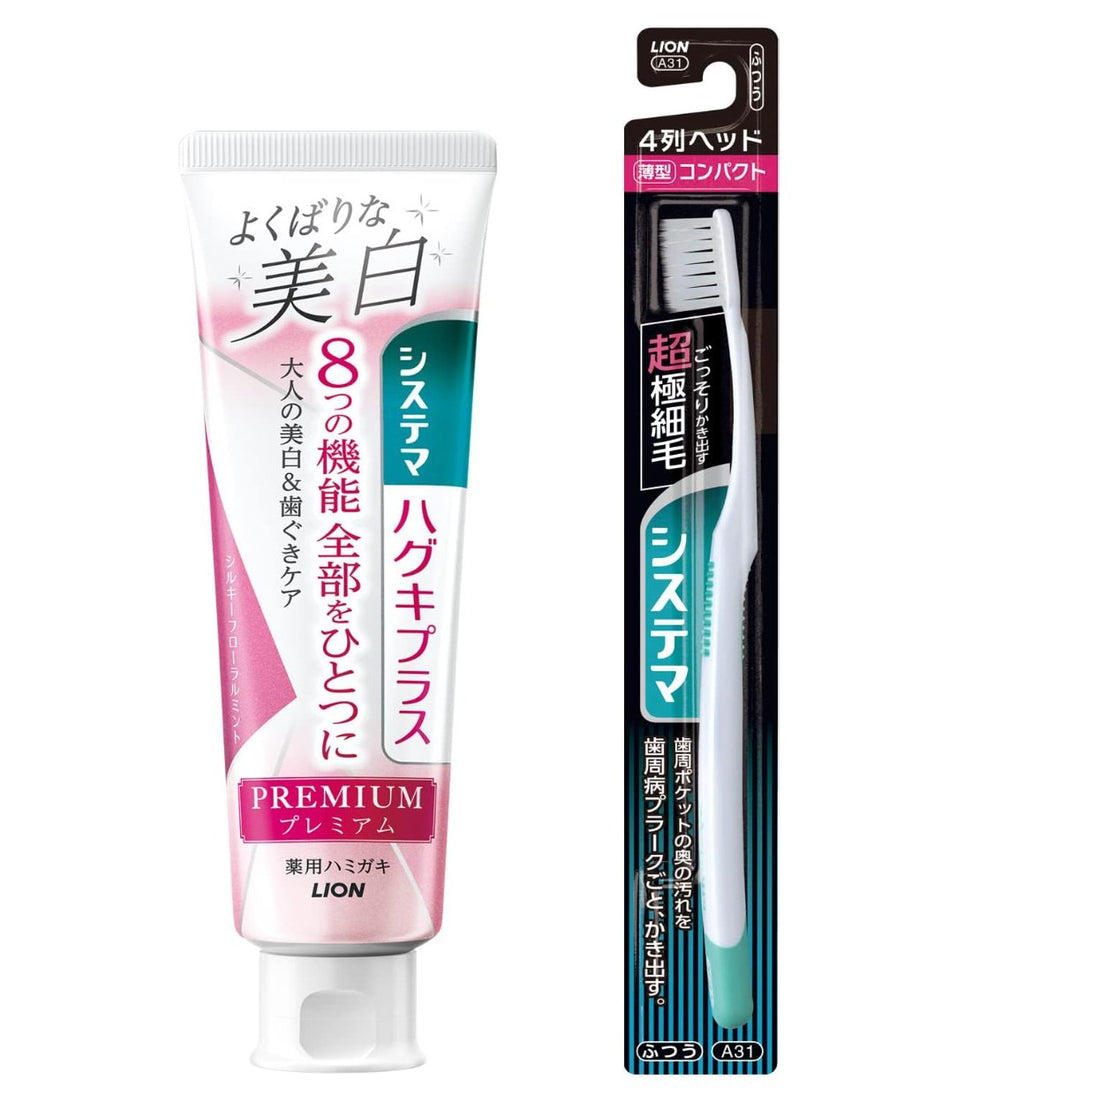 Systema Haguki Plus [Quasi-drug] Premium Toothpaste Delicate Whitening Silky Floral Mint Toothpaste Whitening Periodontal Disease Fluorine 95g + Toothbrush Included - NihonMura